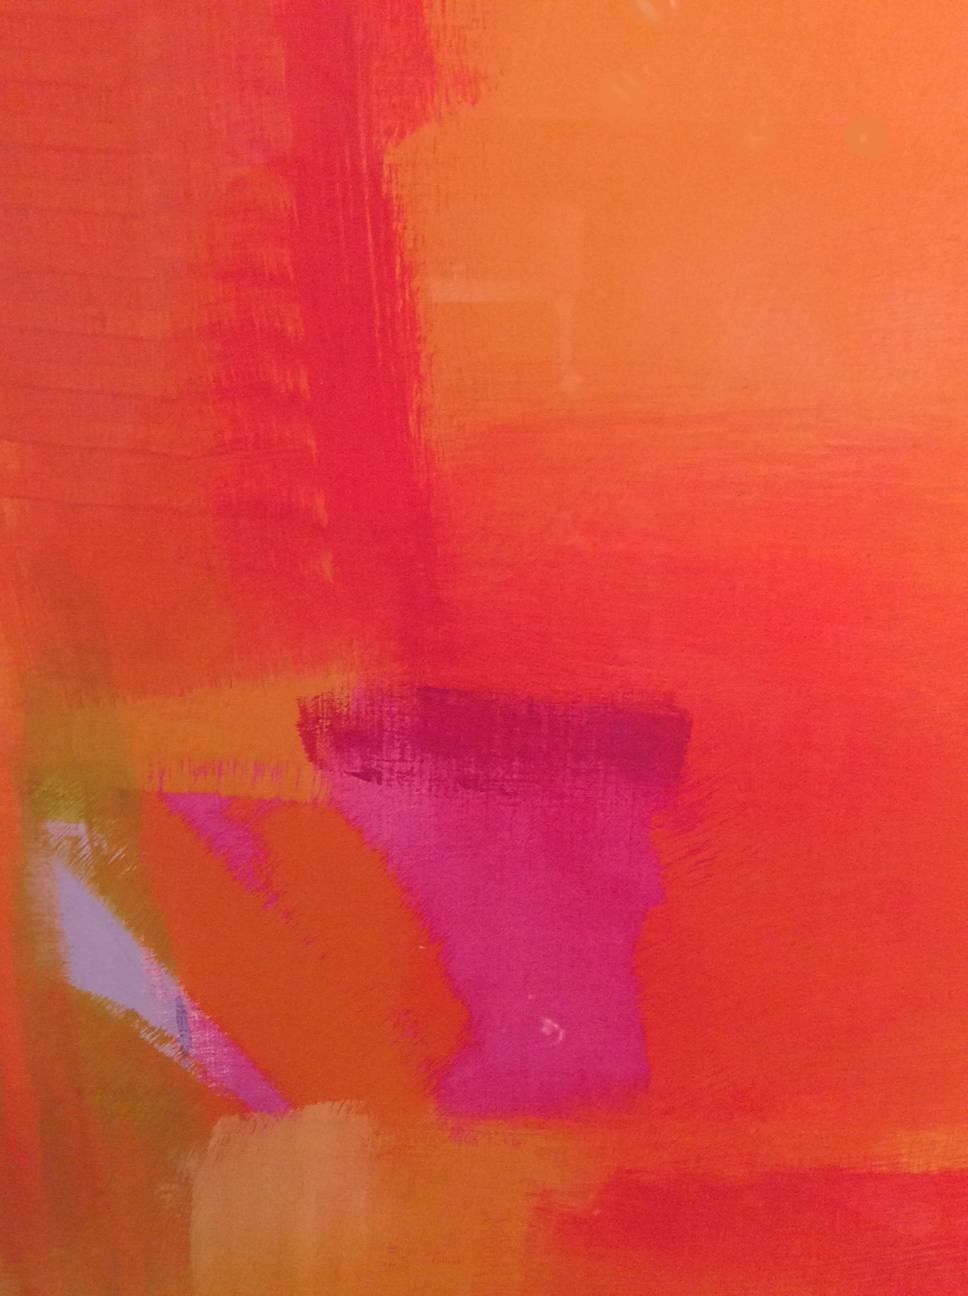 Zen Moment - Orange Abstract Print by Katherine Evans